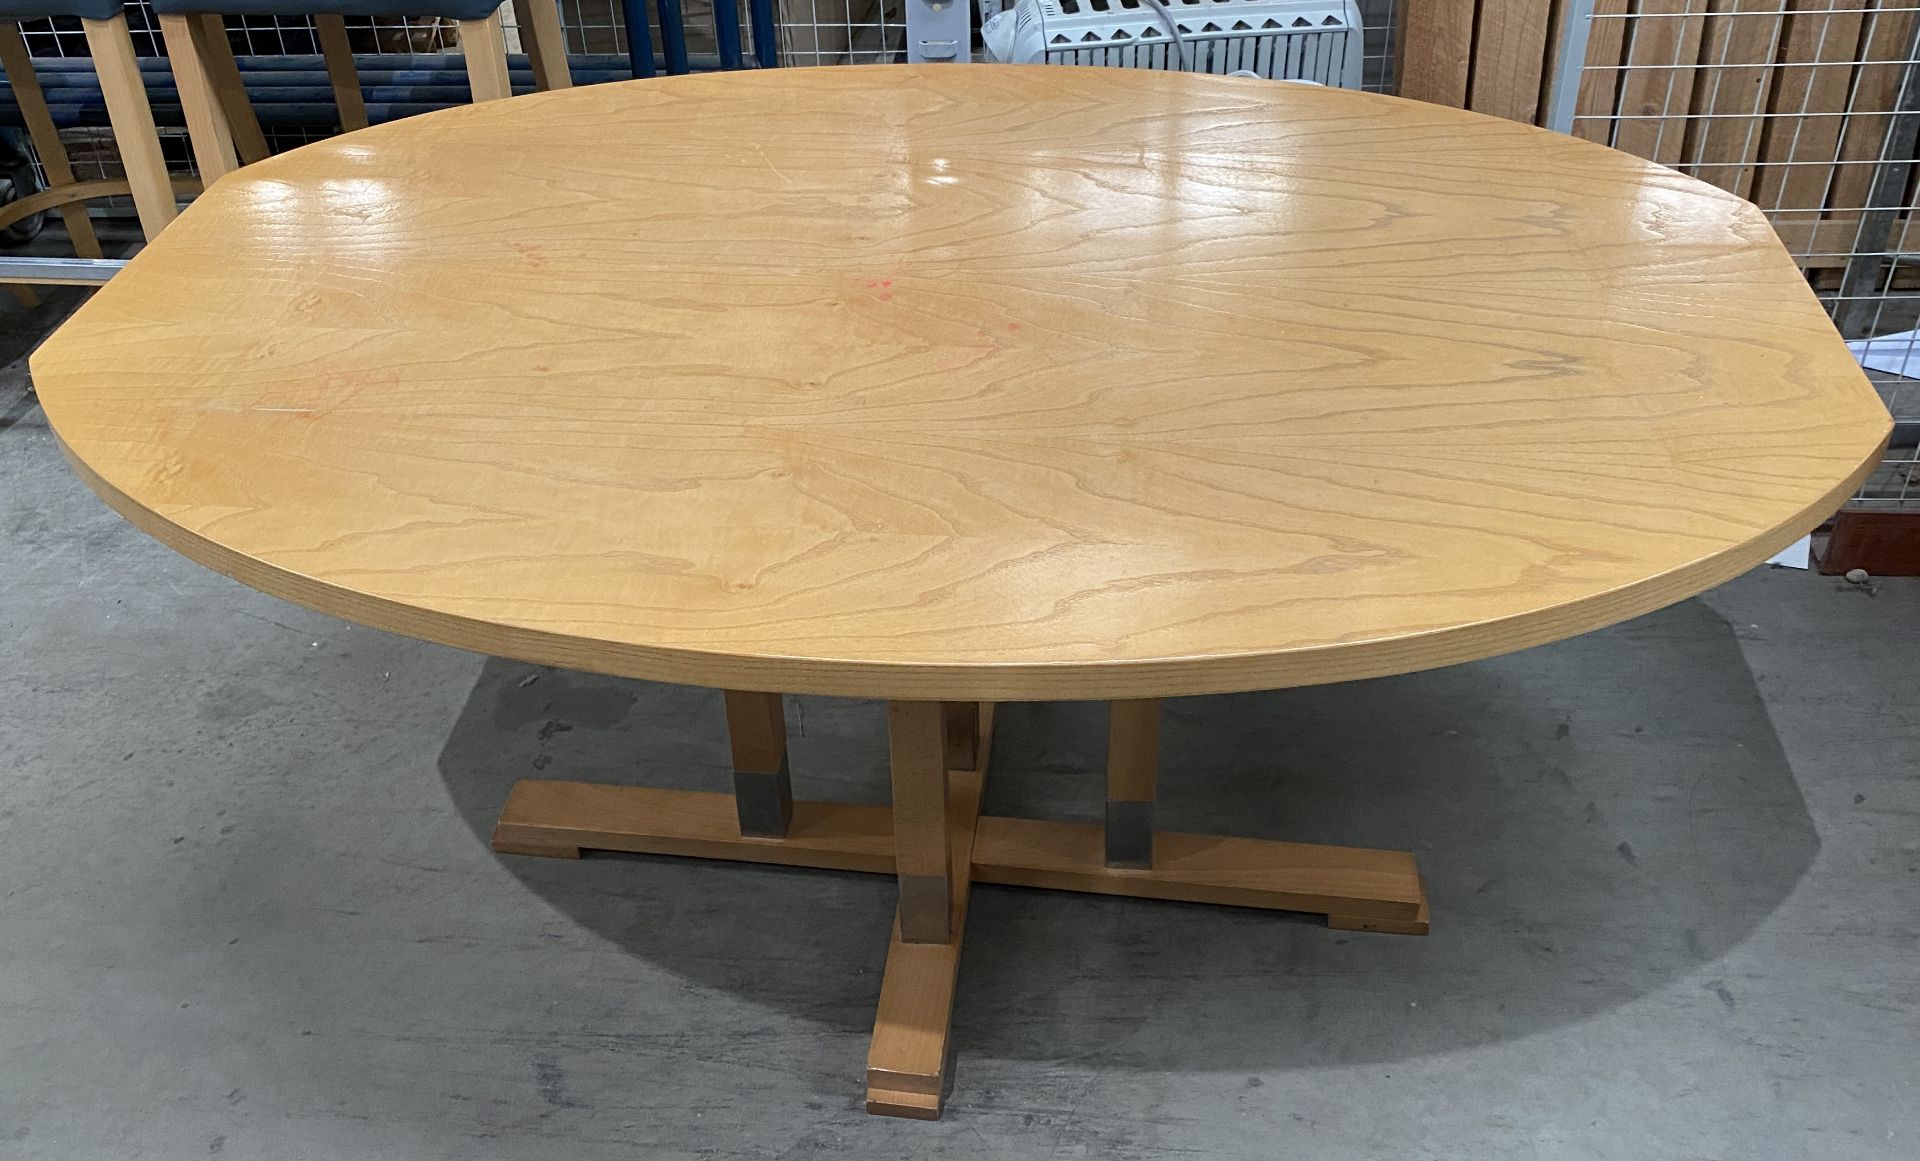 3 x Oval Oak Laminate Square Ended Dining Tables on 4 Leg Base - 100cm x 145cm